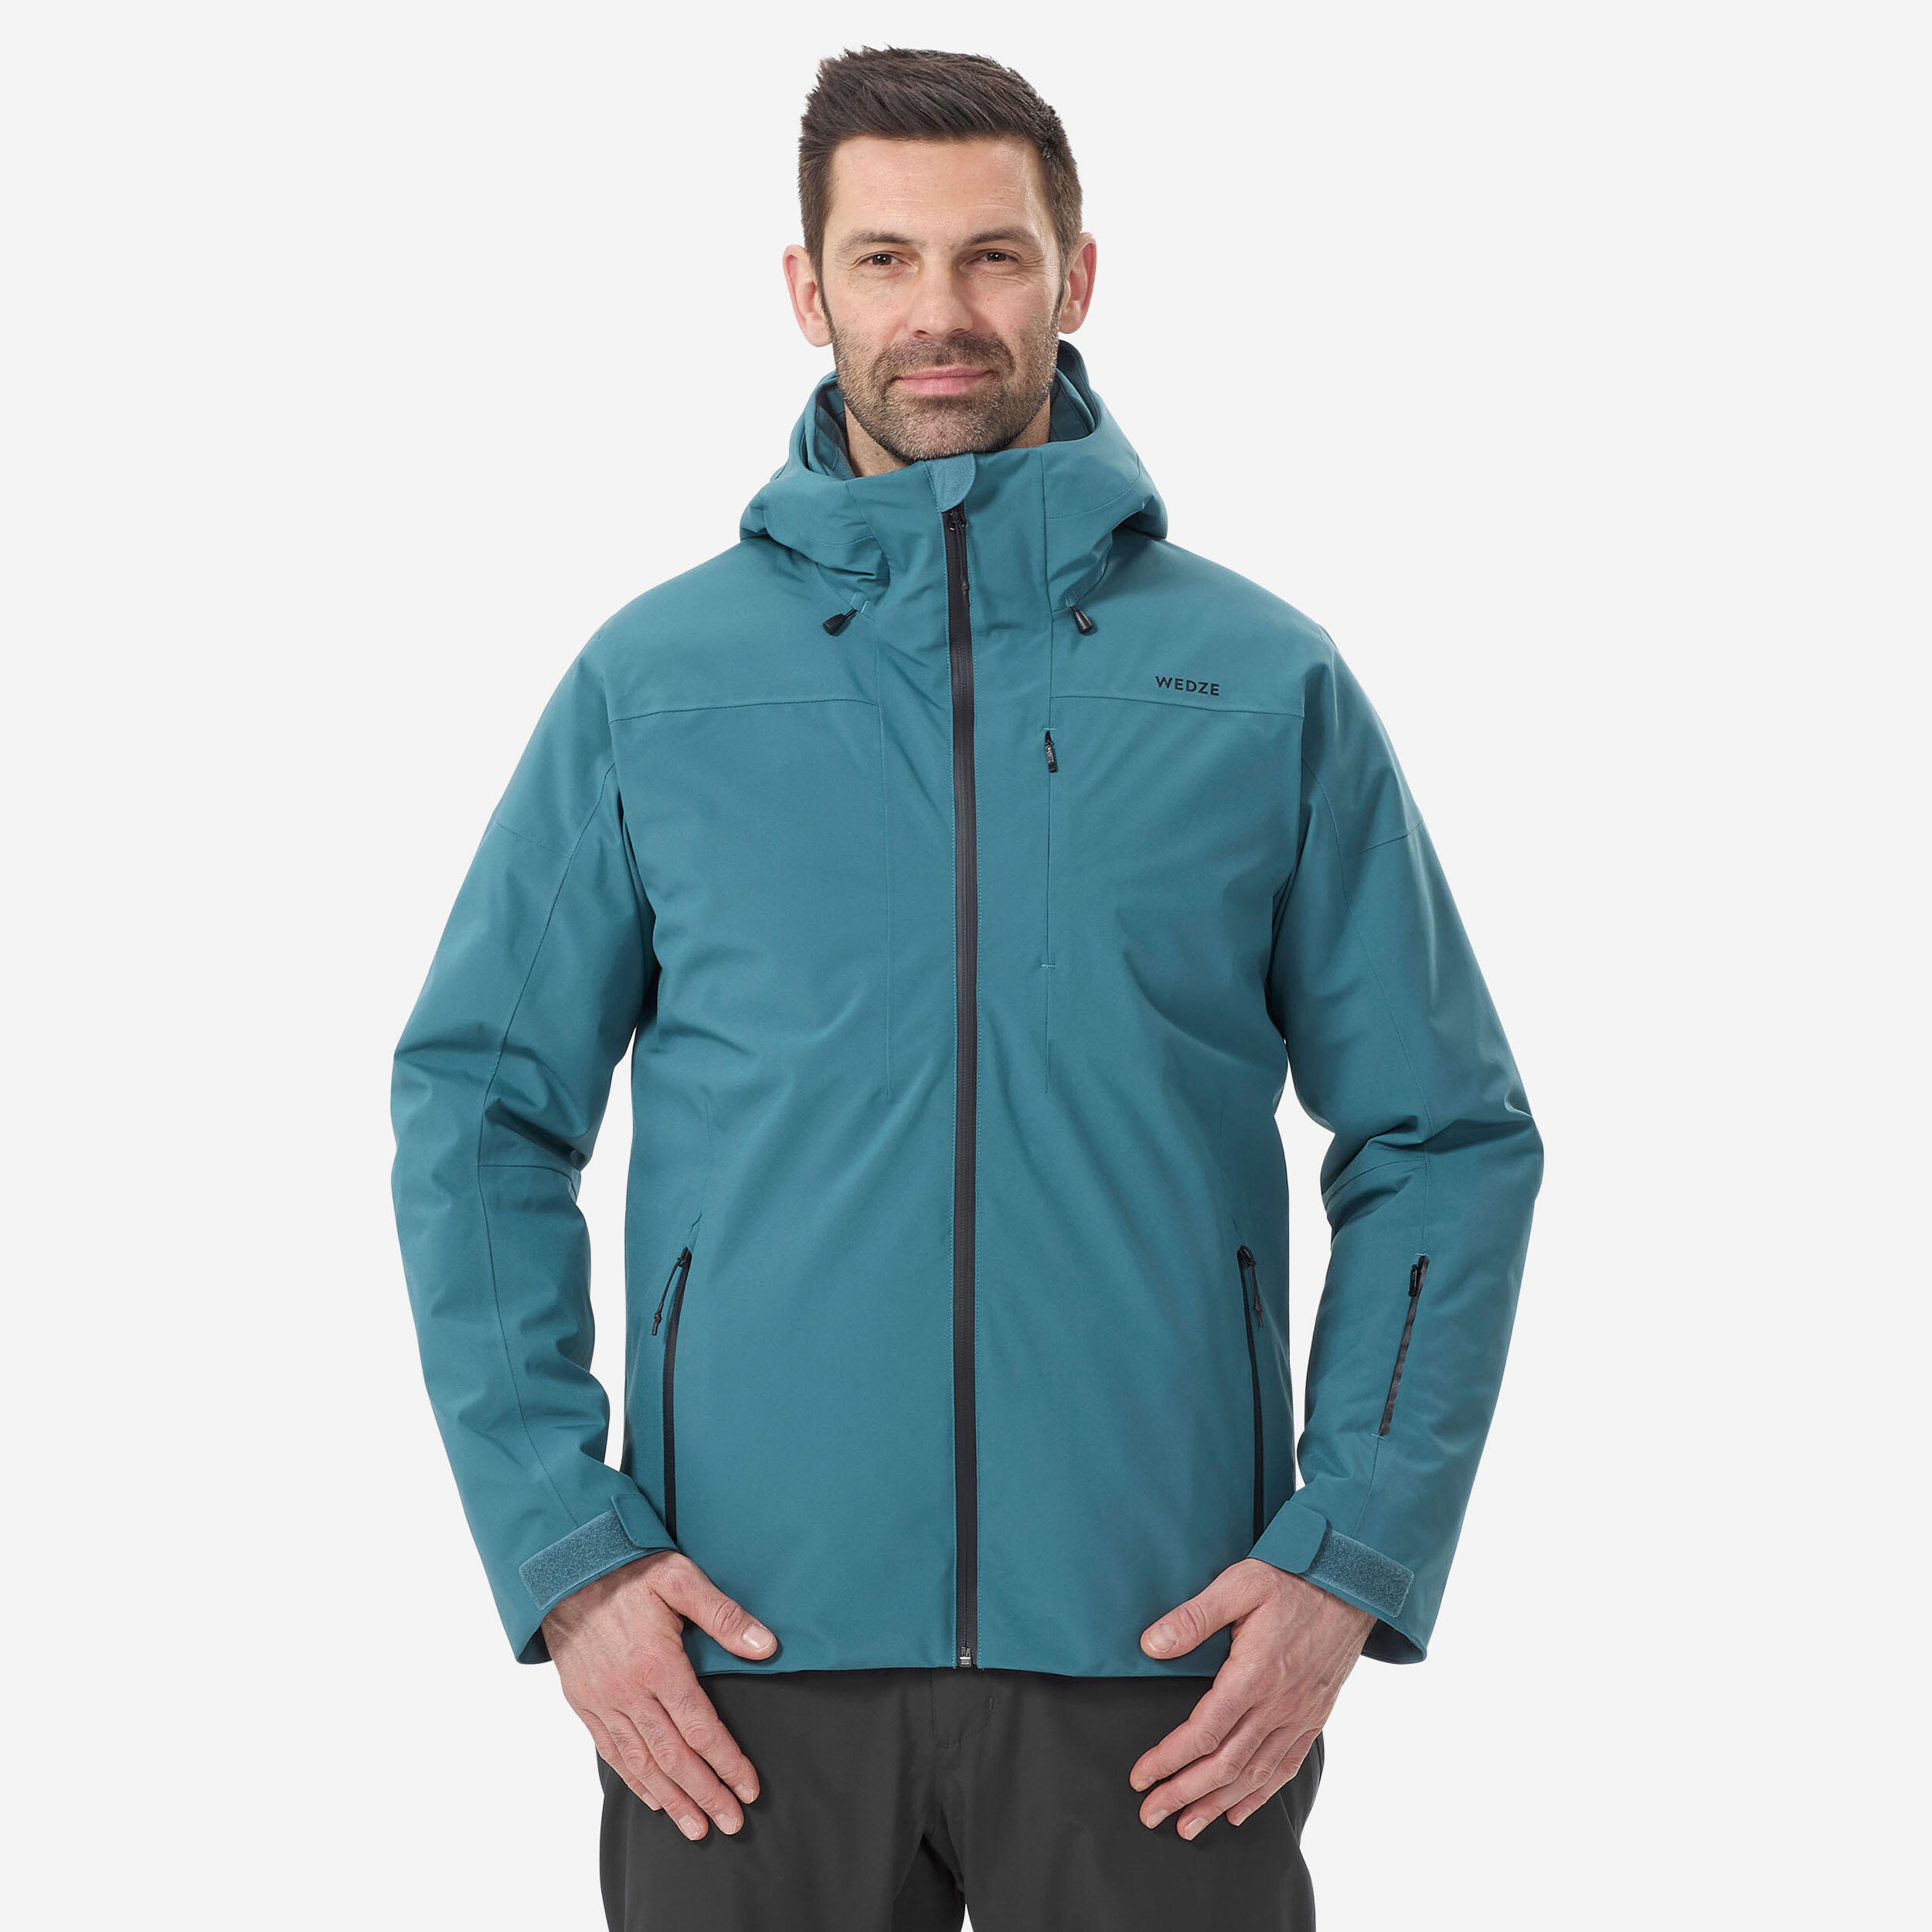 WEDZE Men's Warm Ski Jacket - 500 - Blue